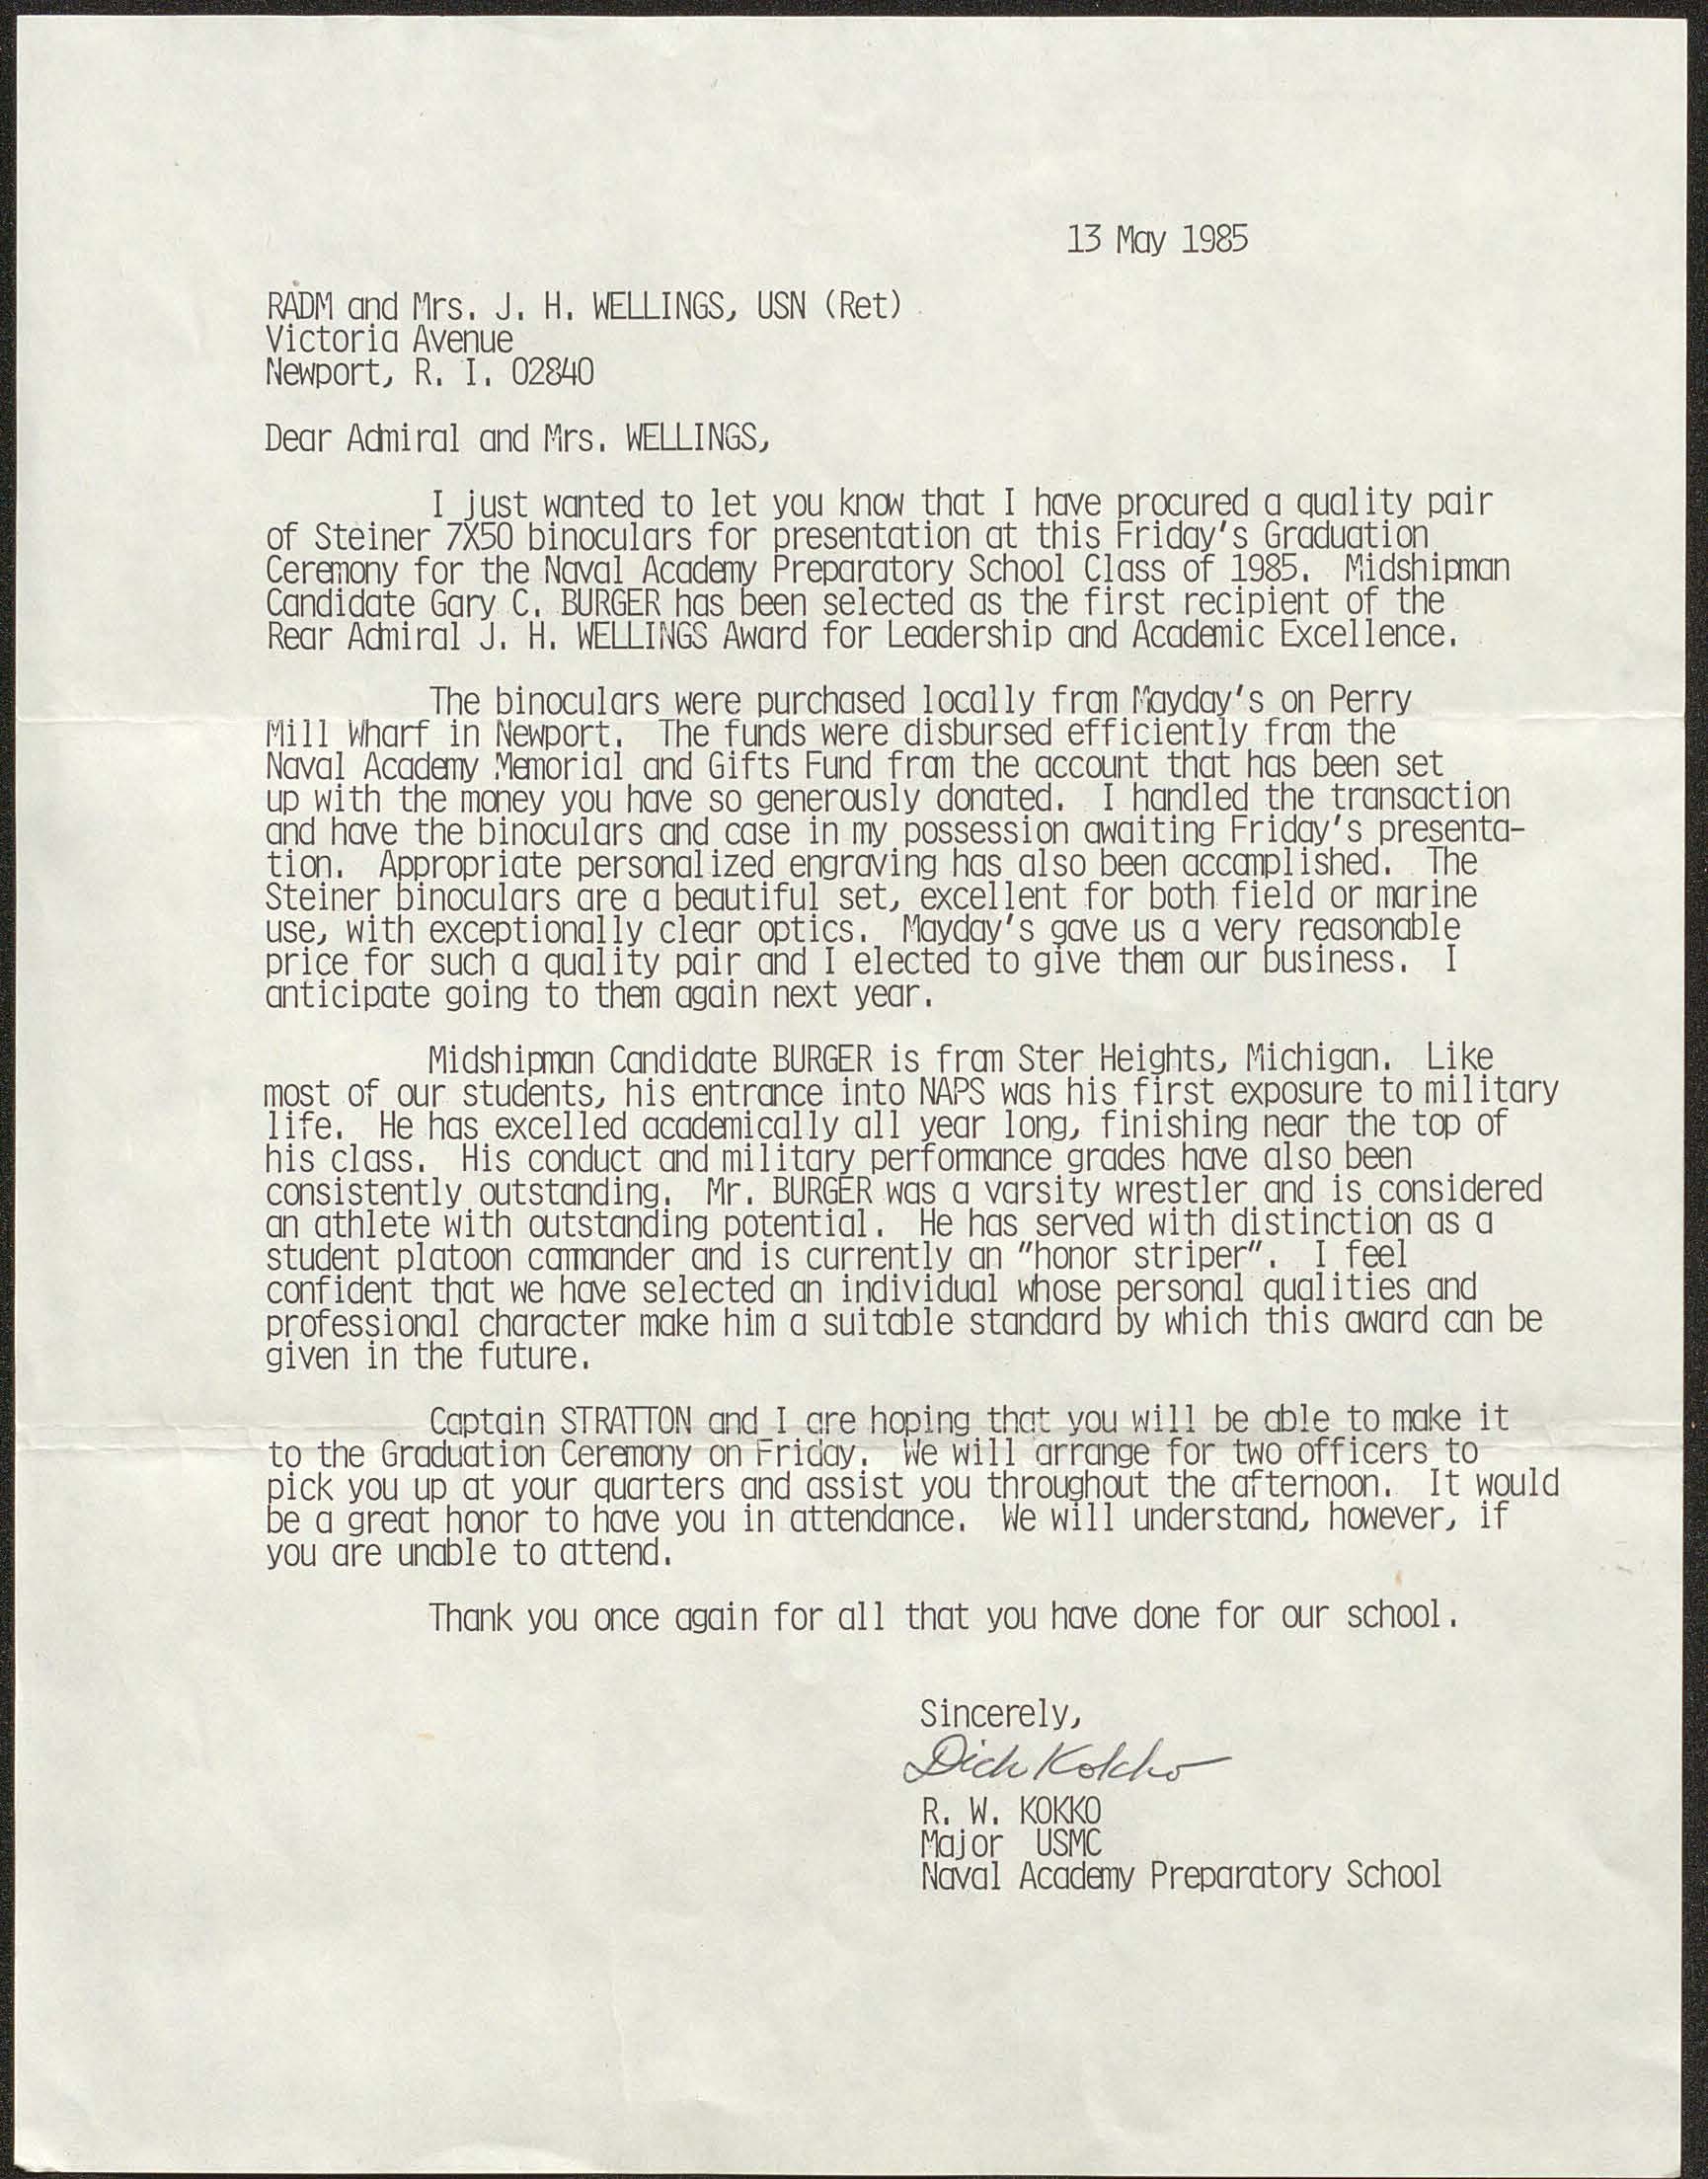 Letter from Major Richard W. Kokko, USMC to RADM and Mrs. Joseph H. Wellings